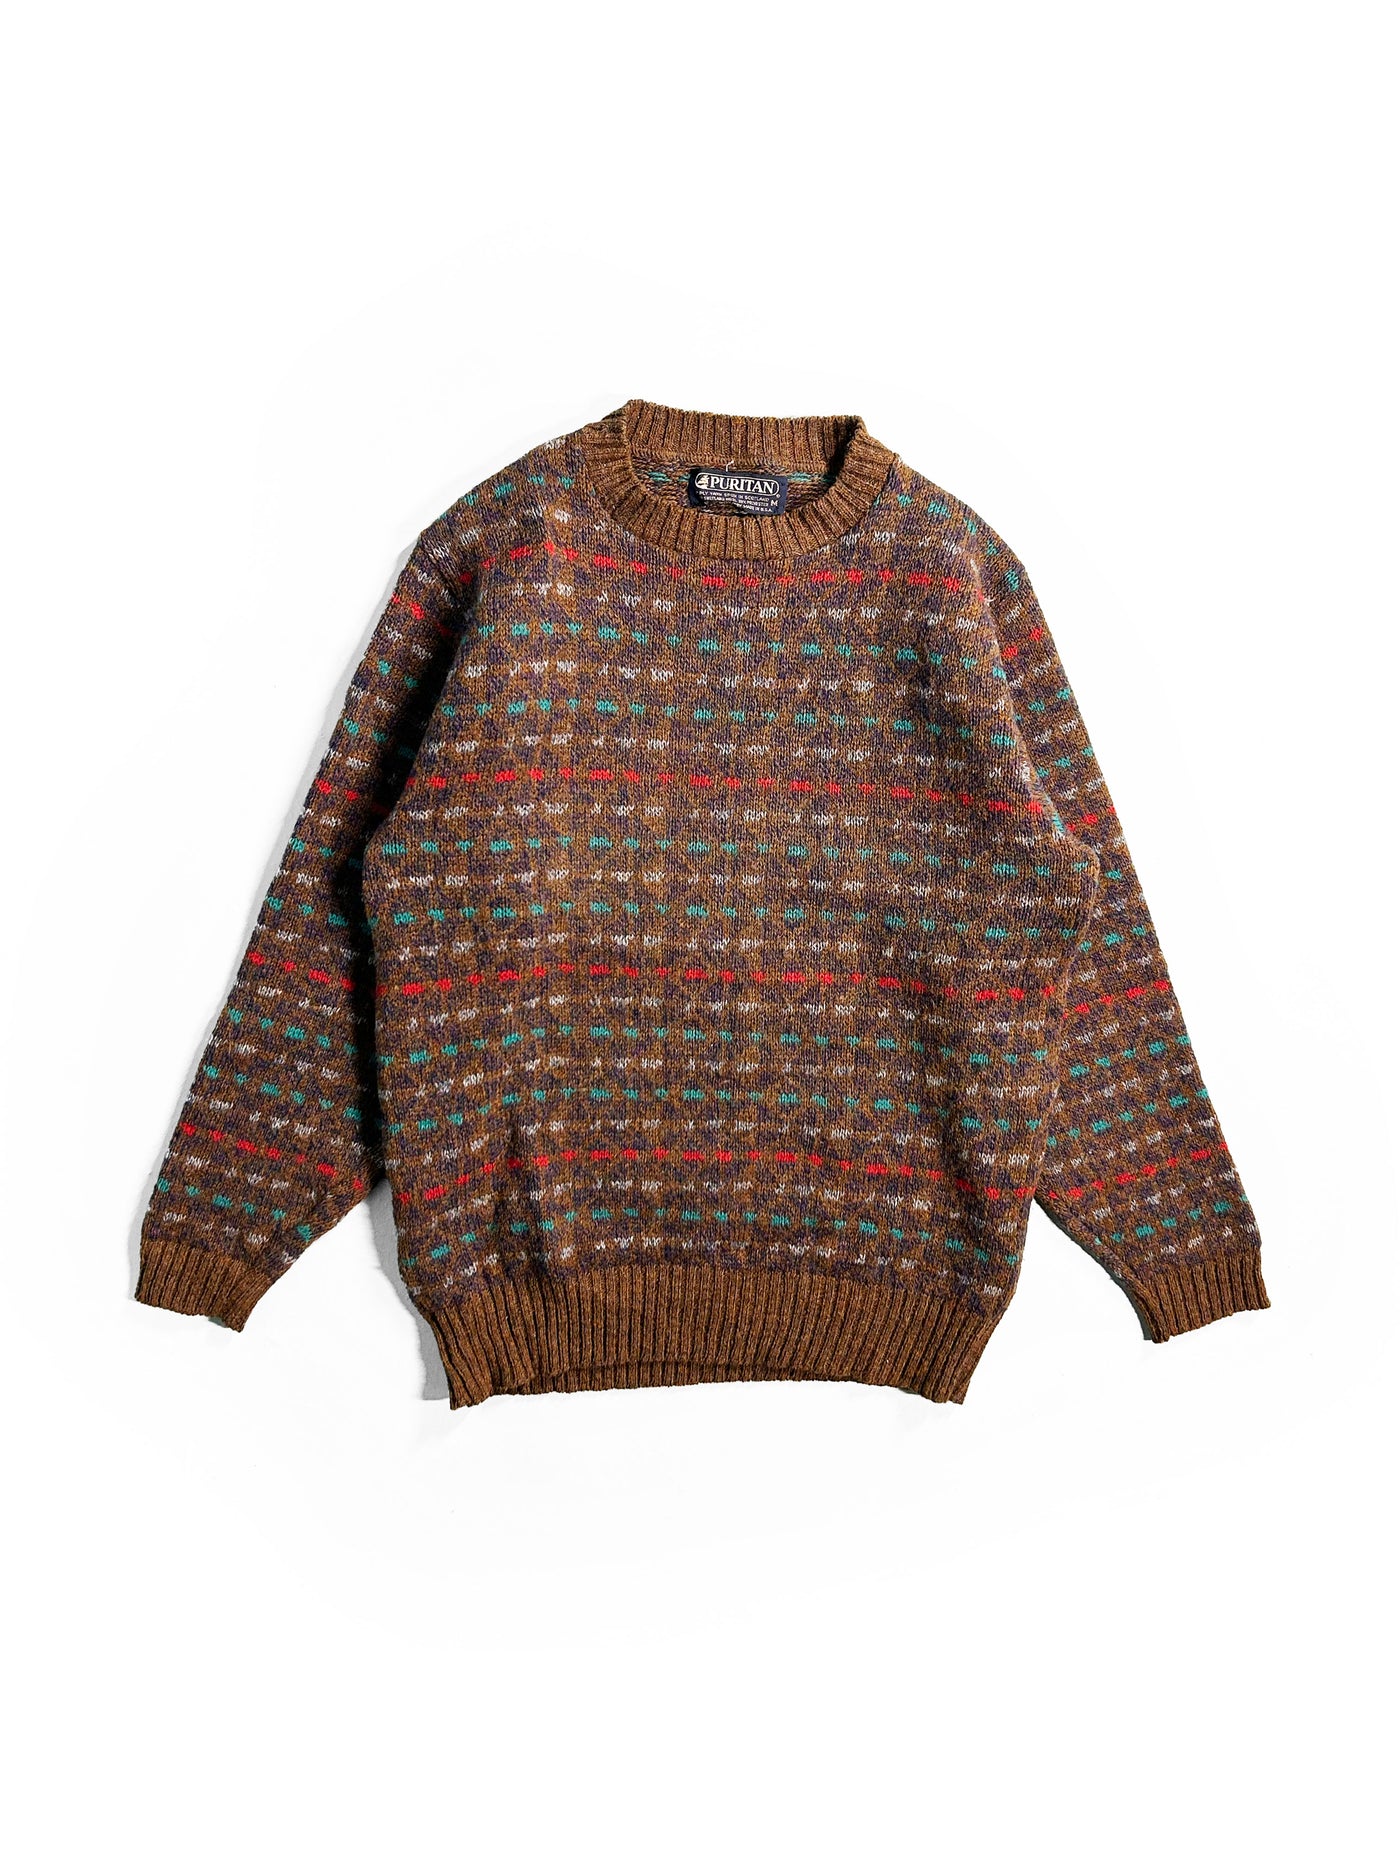 Vintage 90s Puritan Patterned Sweater